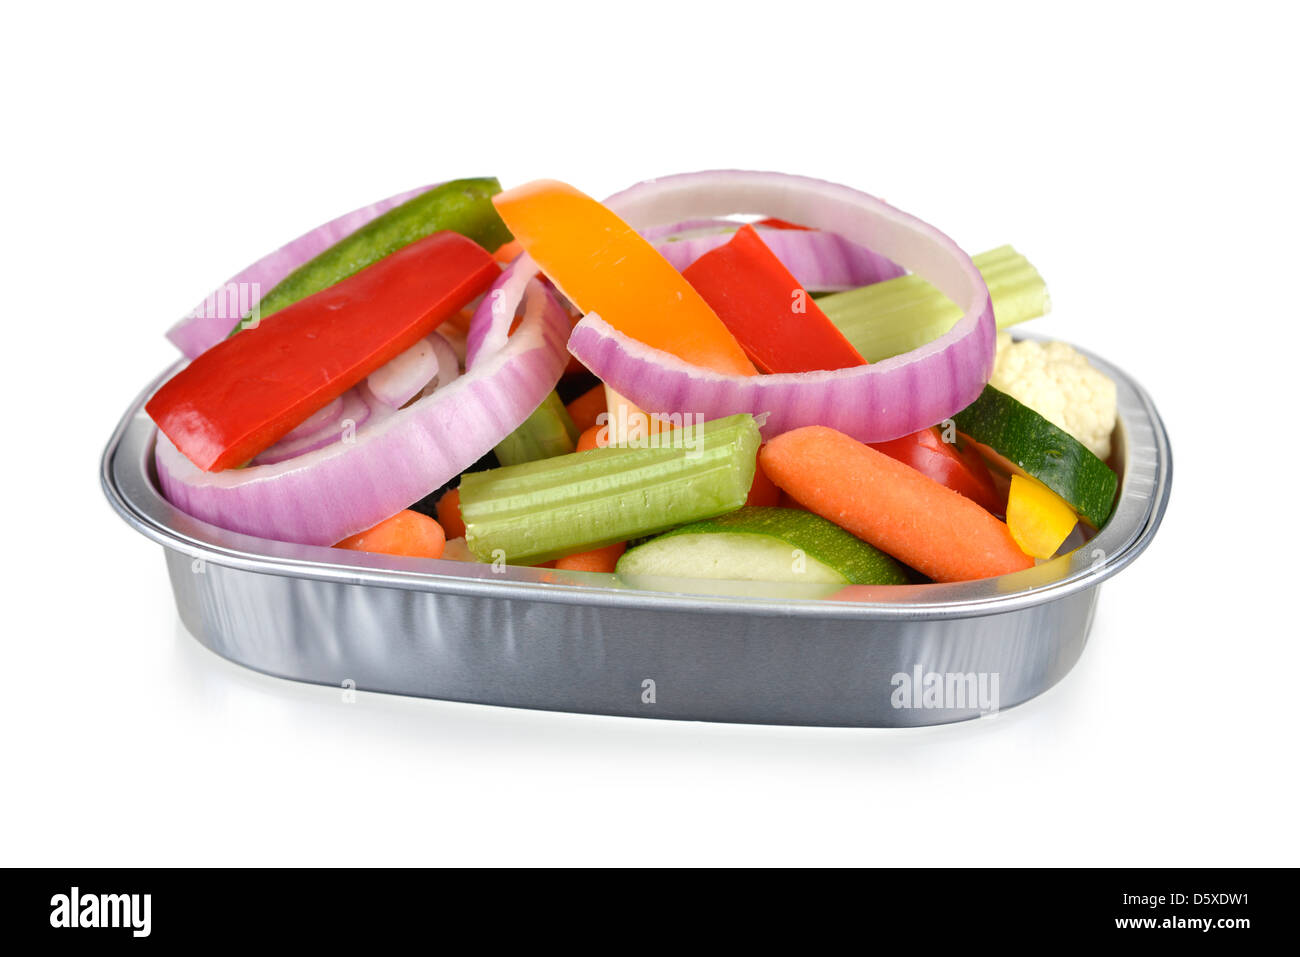 Pre-cut Vegetables for Stir Fry Stock Photo